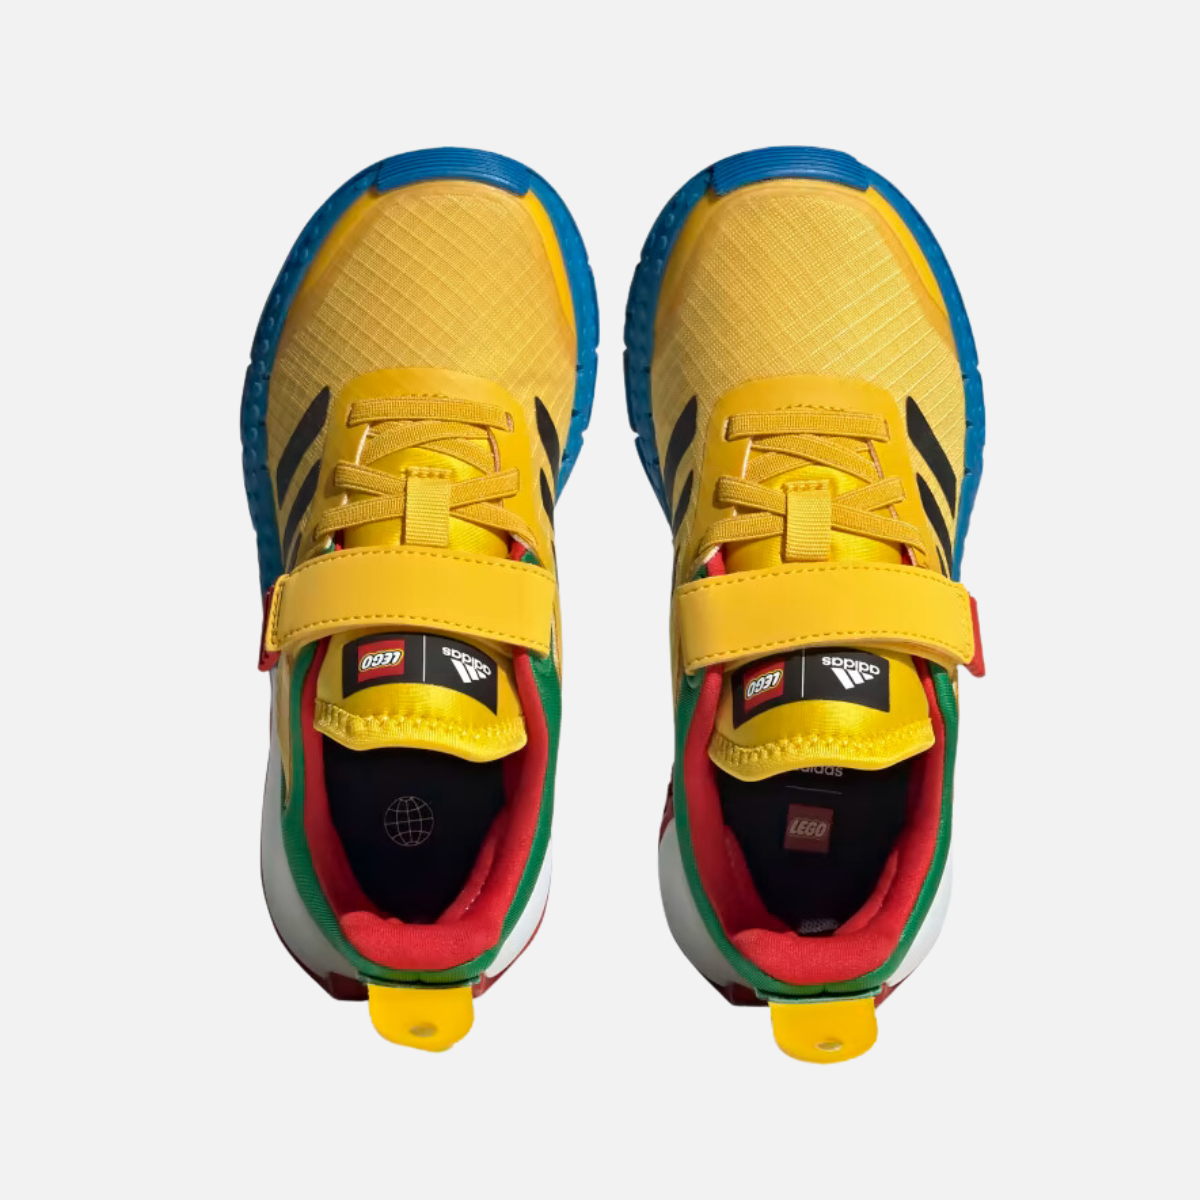 Adidas Lego Sports DNA X Elastic Lace Kids Unisex Shoes -Eqt Yellow/Core Black/Shock Blue